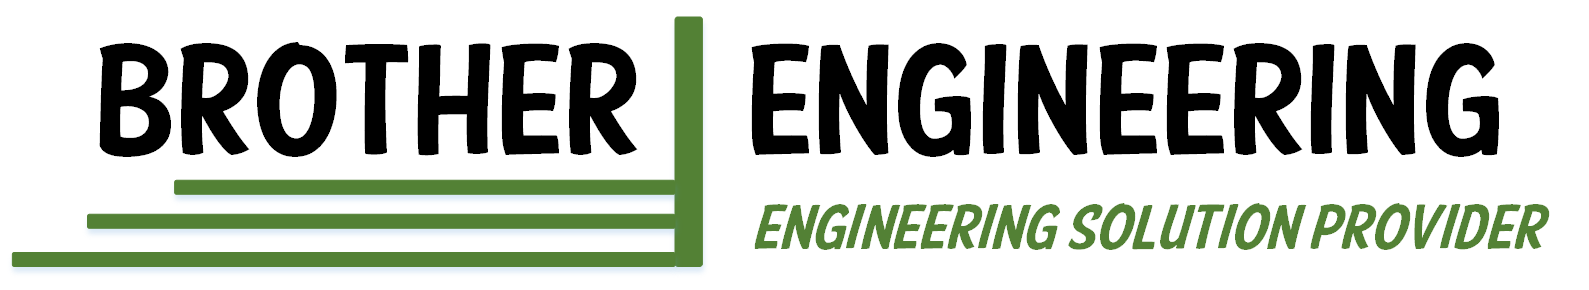 Brother Engineering Ltd